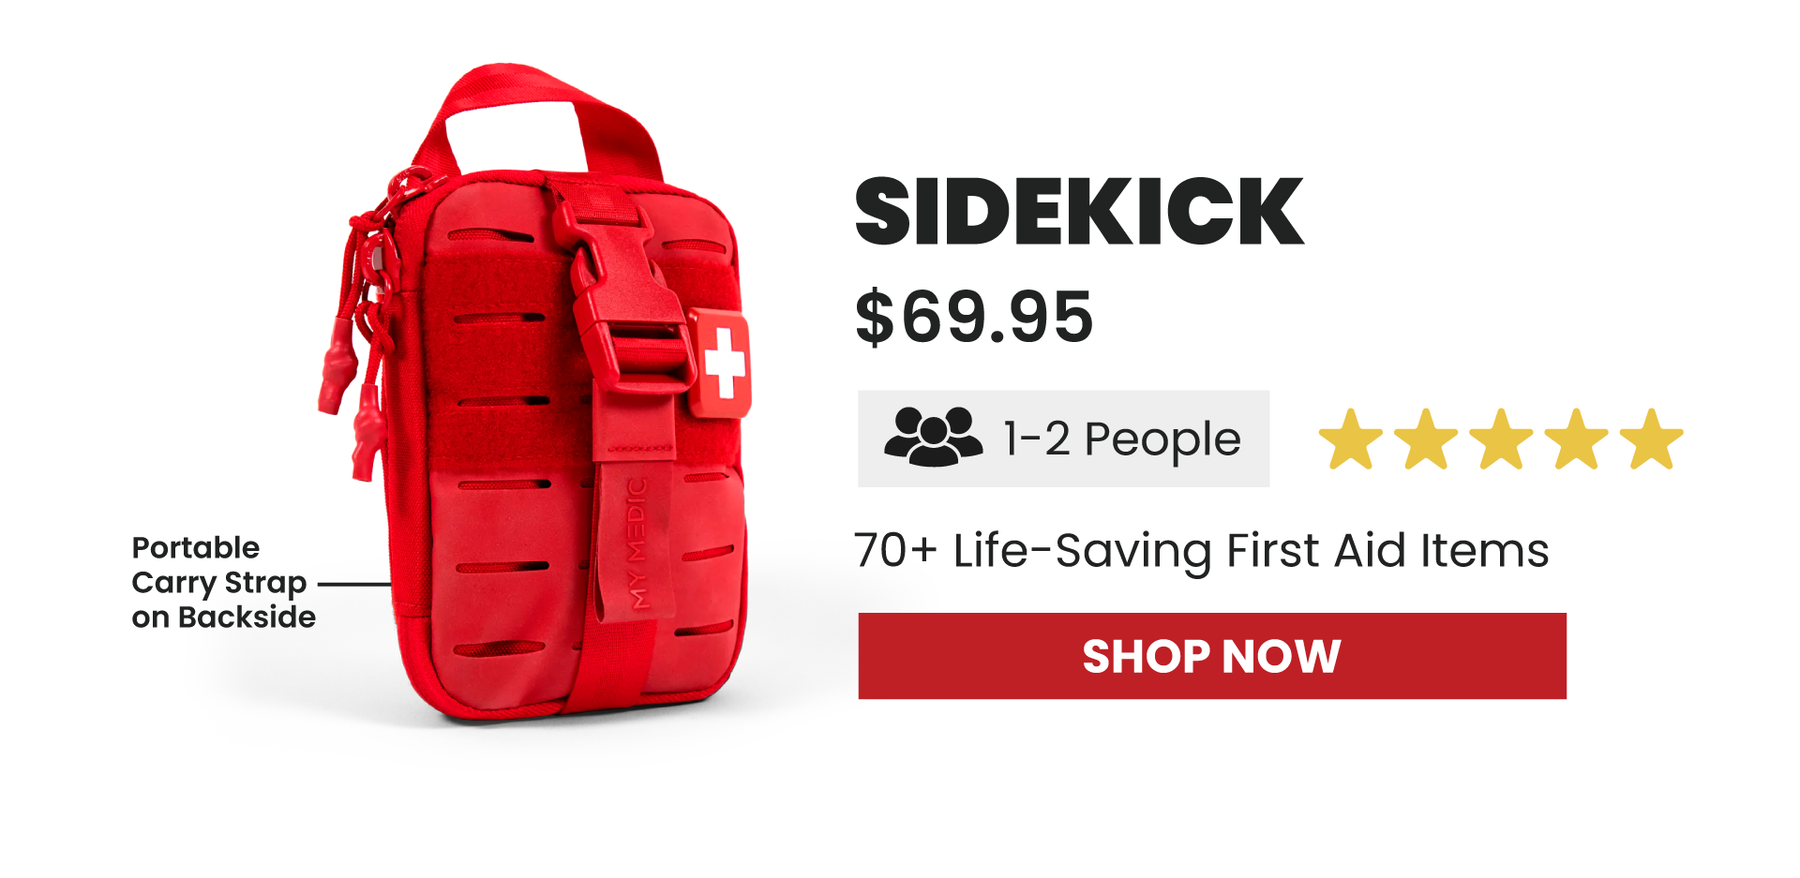 Sidekick, $69.95, 1-2 People, 70+ Life-Saving First Aid Items, Shop Now